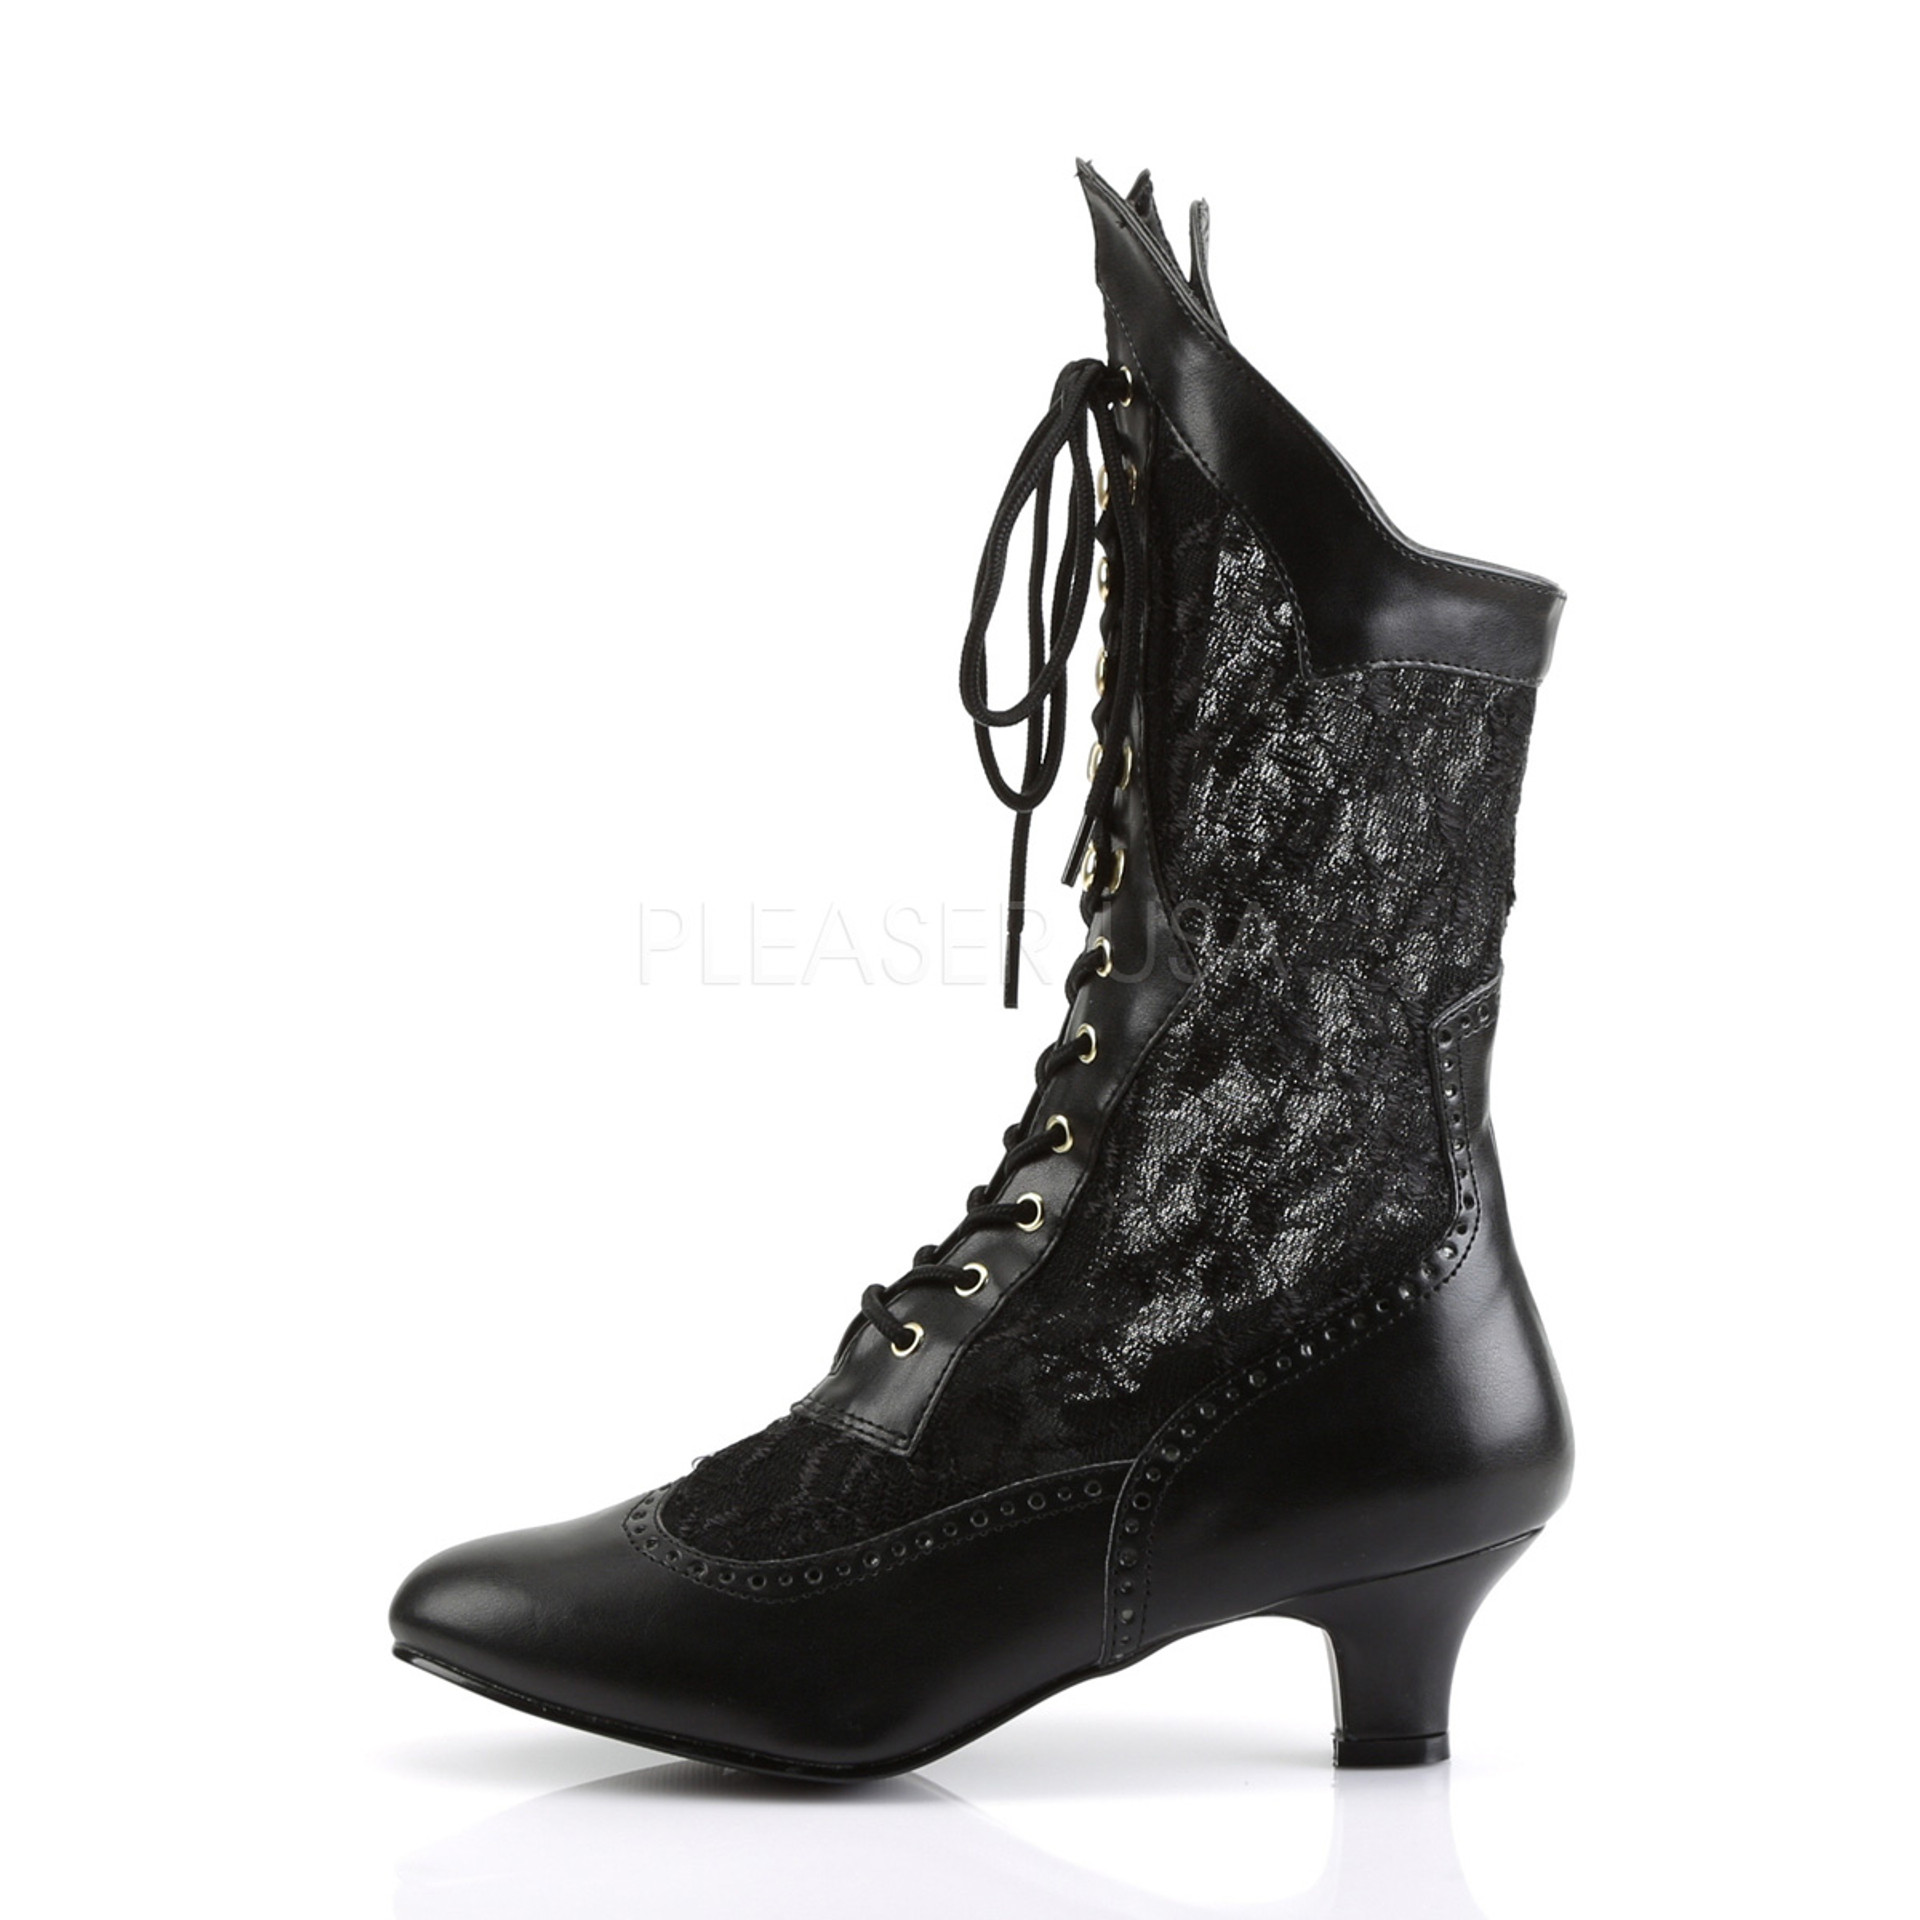 Black victorian lace boots